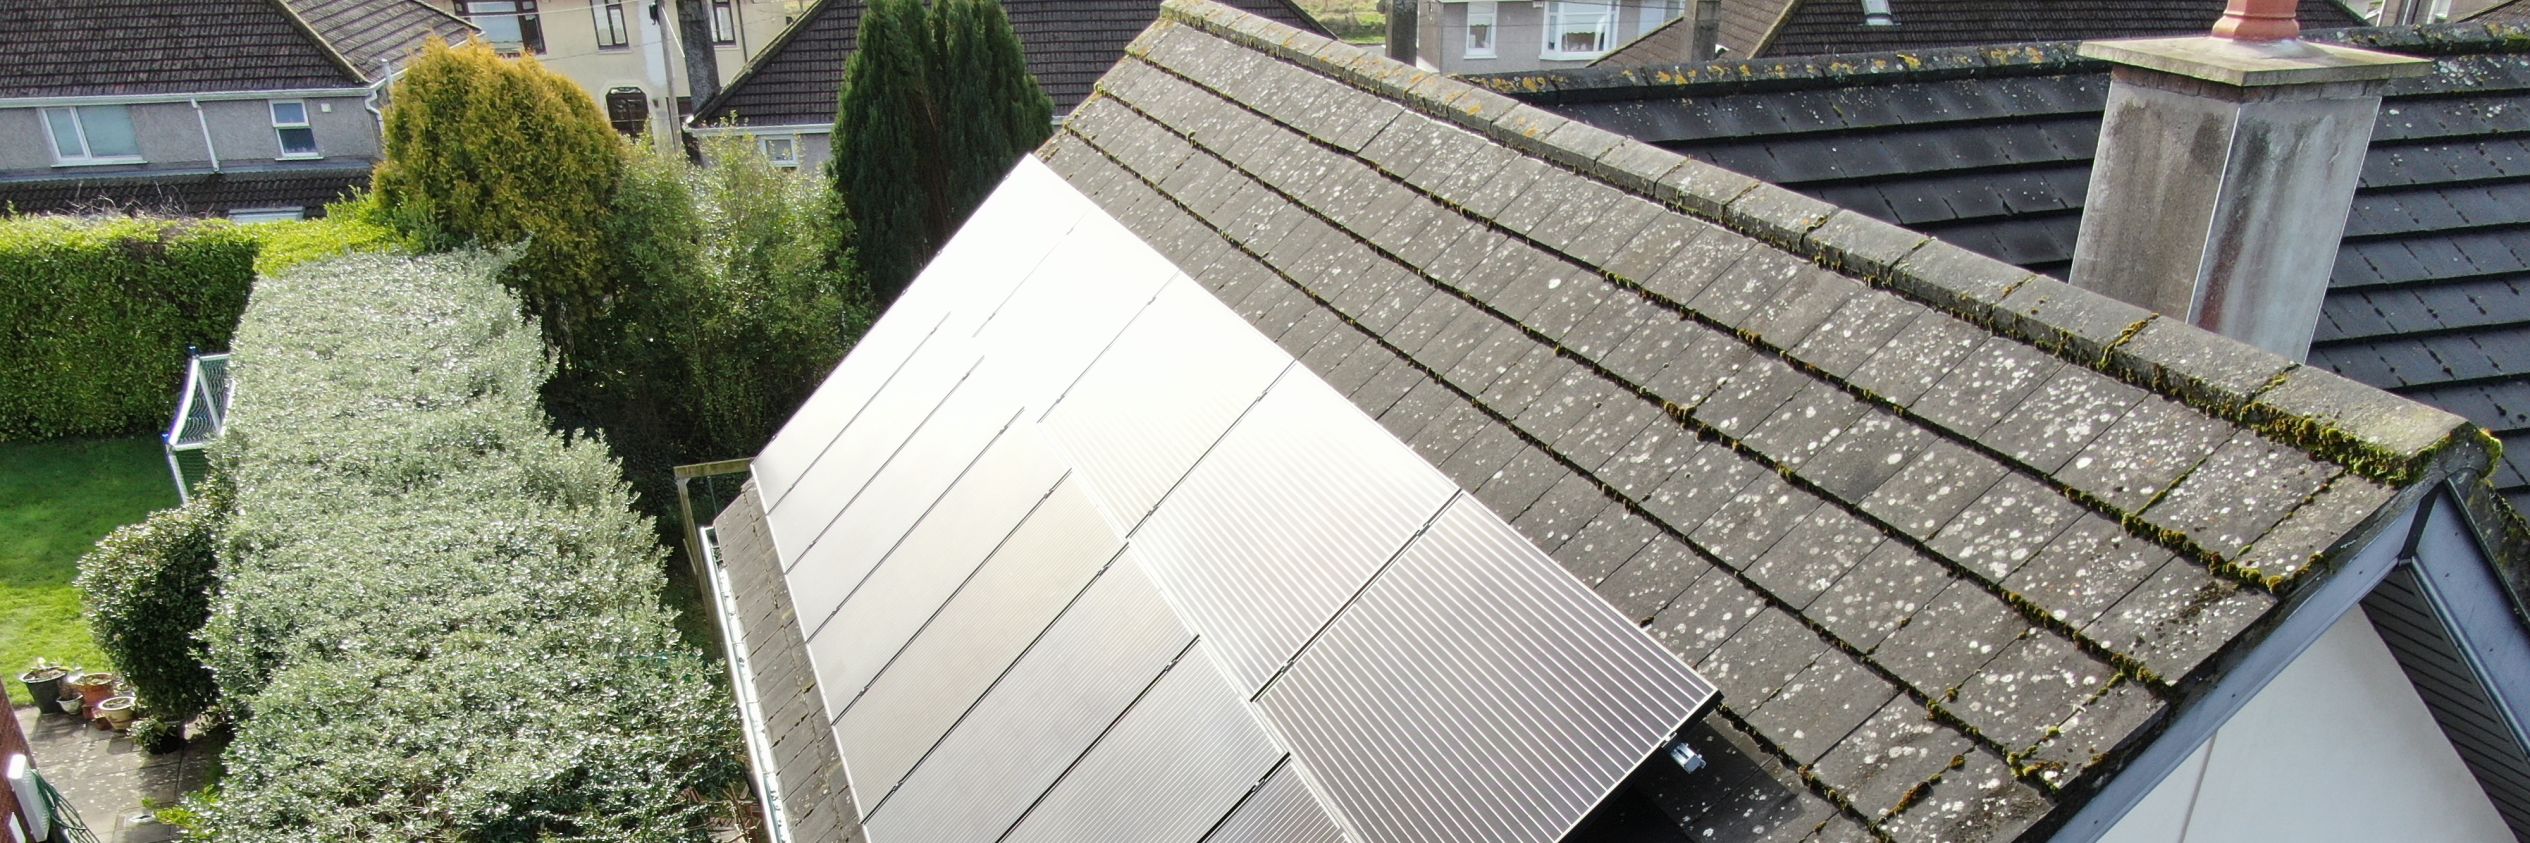 Residential solar panels in Ireland